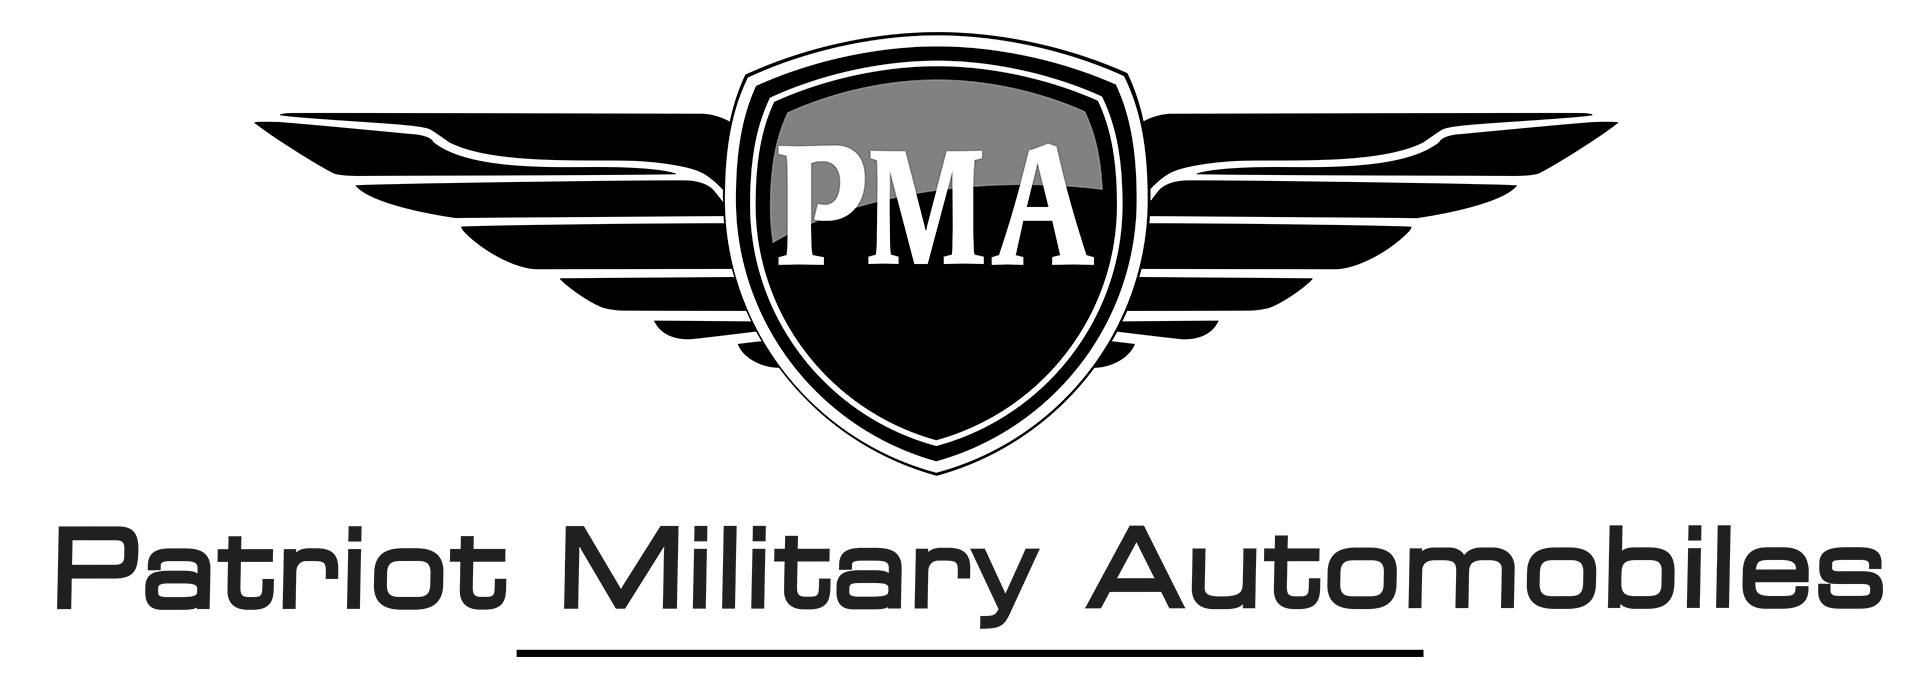 PMA_Logo-web.png